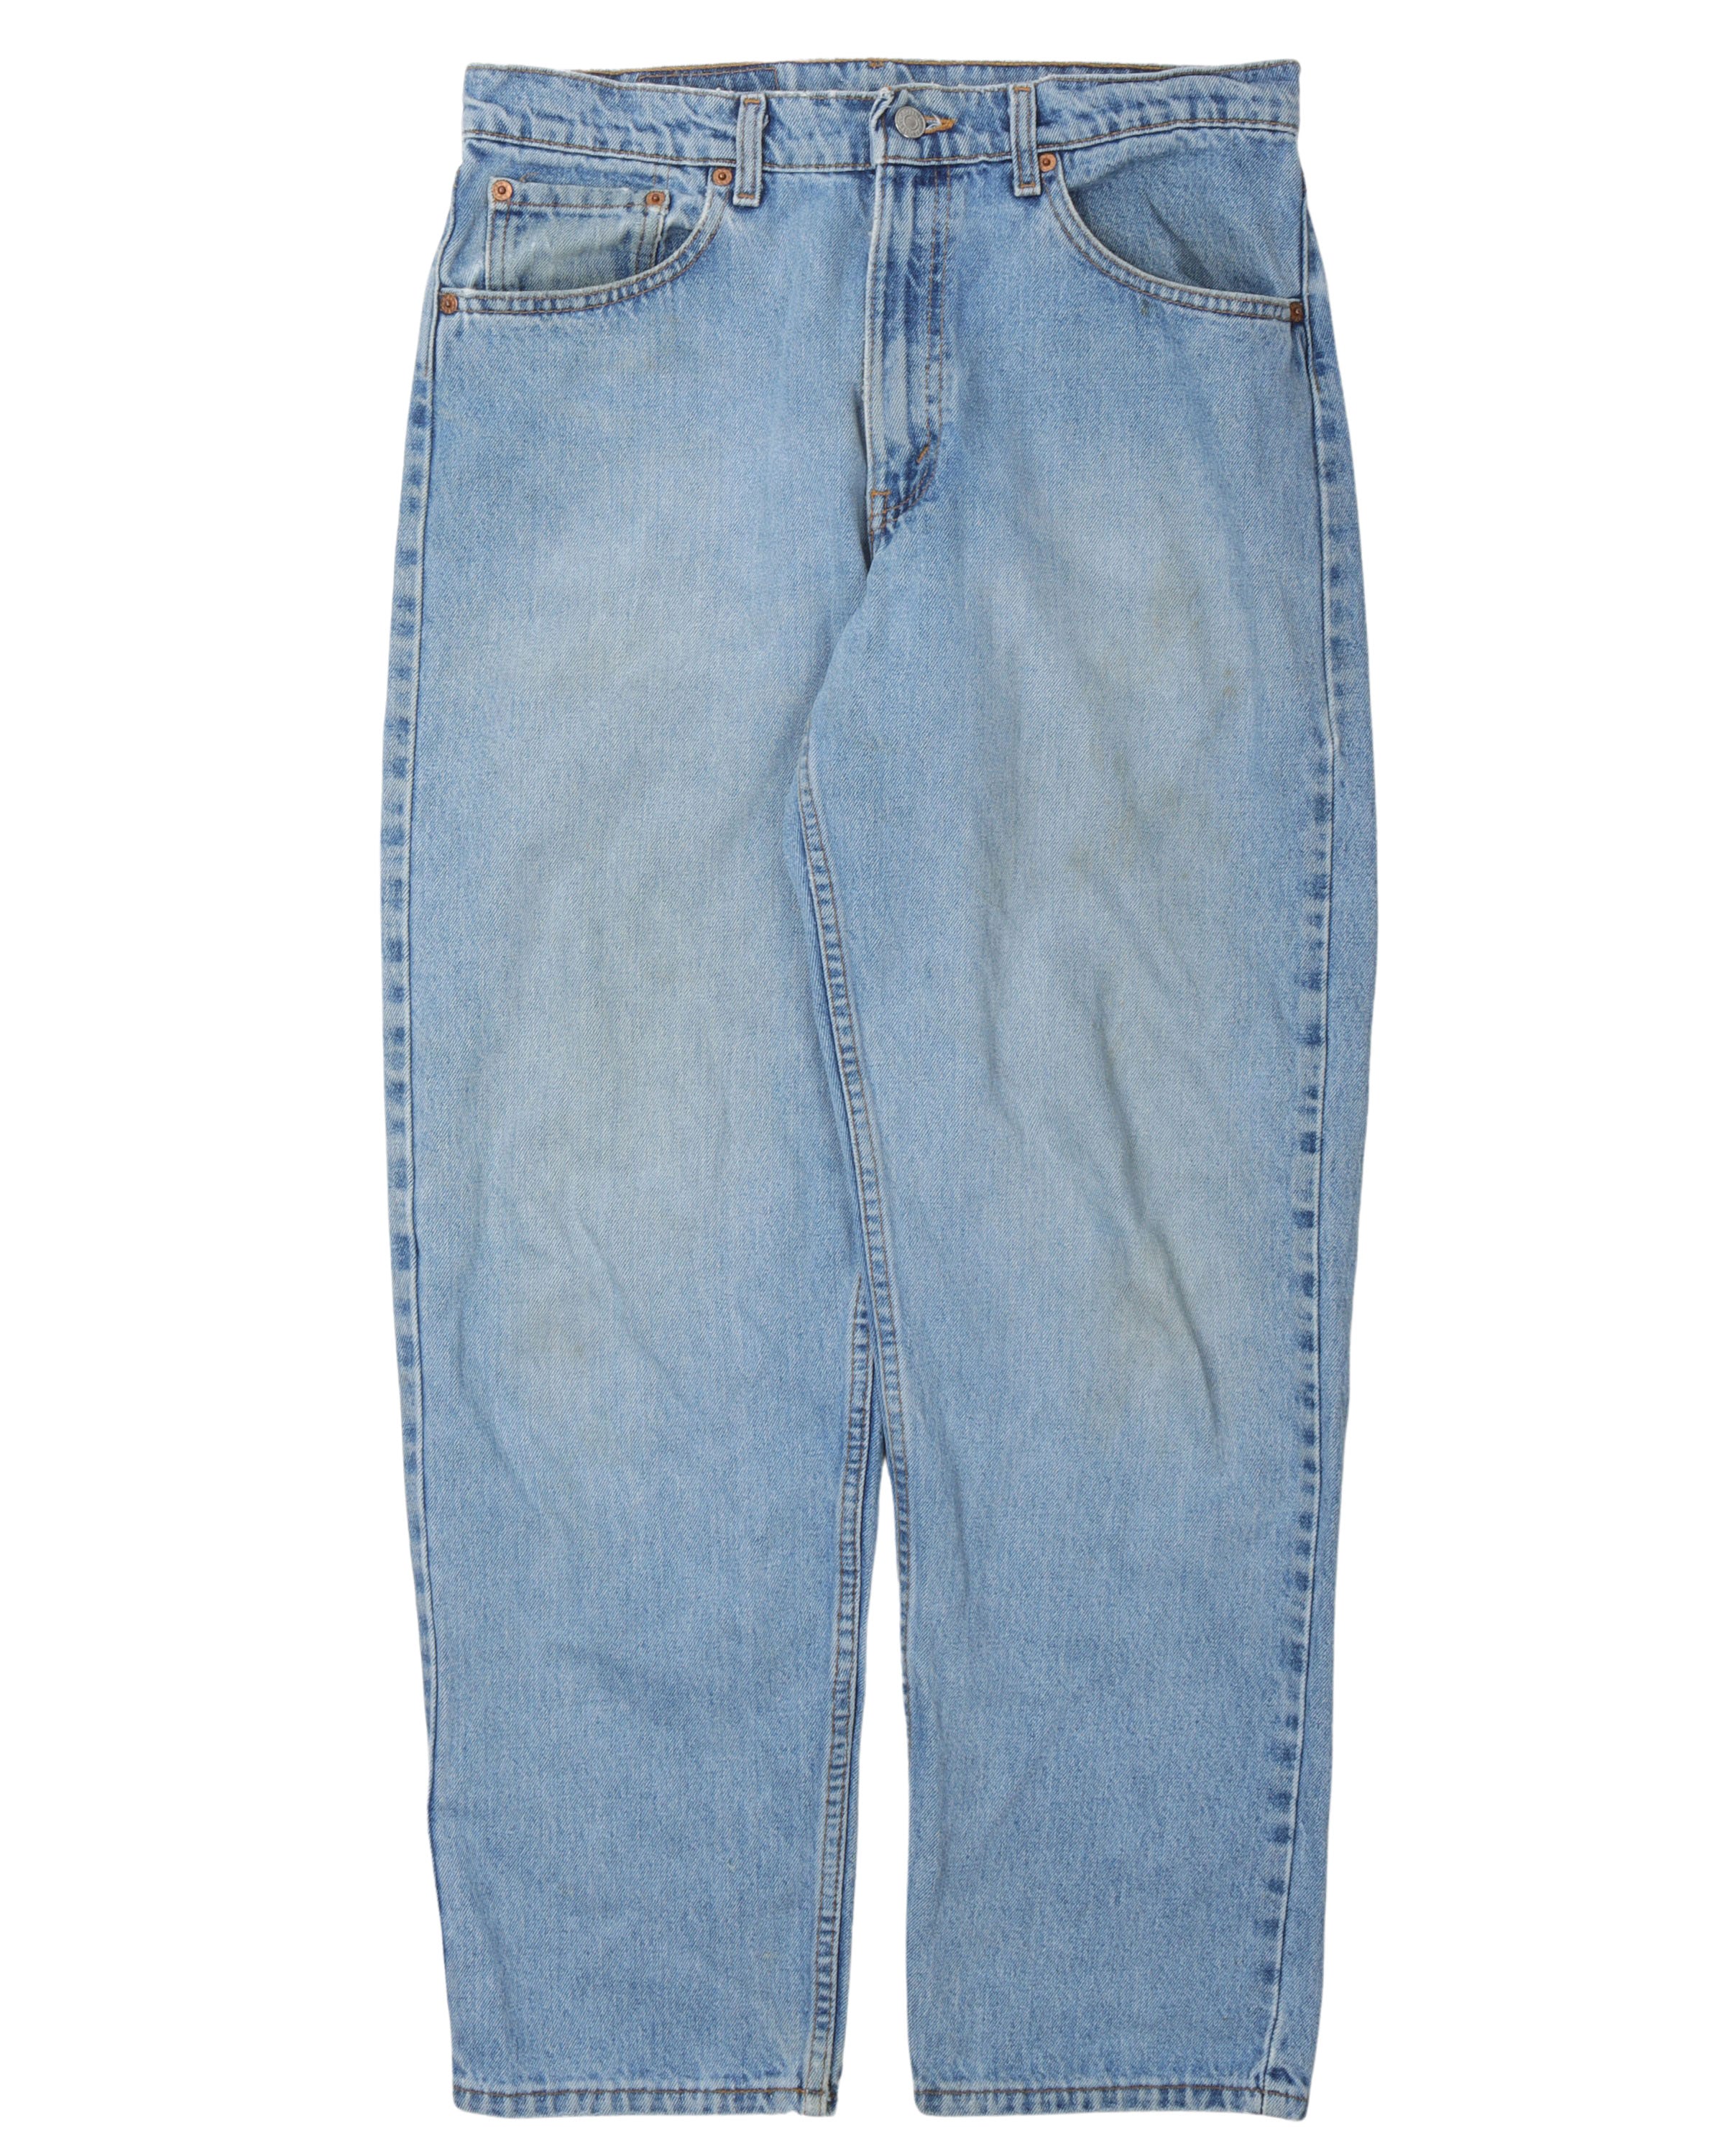 Vintage Levi's 550 Light Wash Jeans